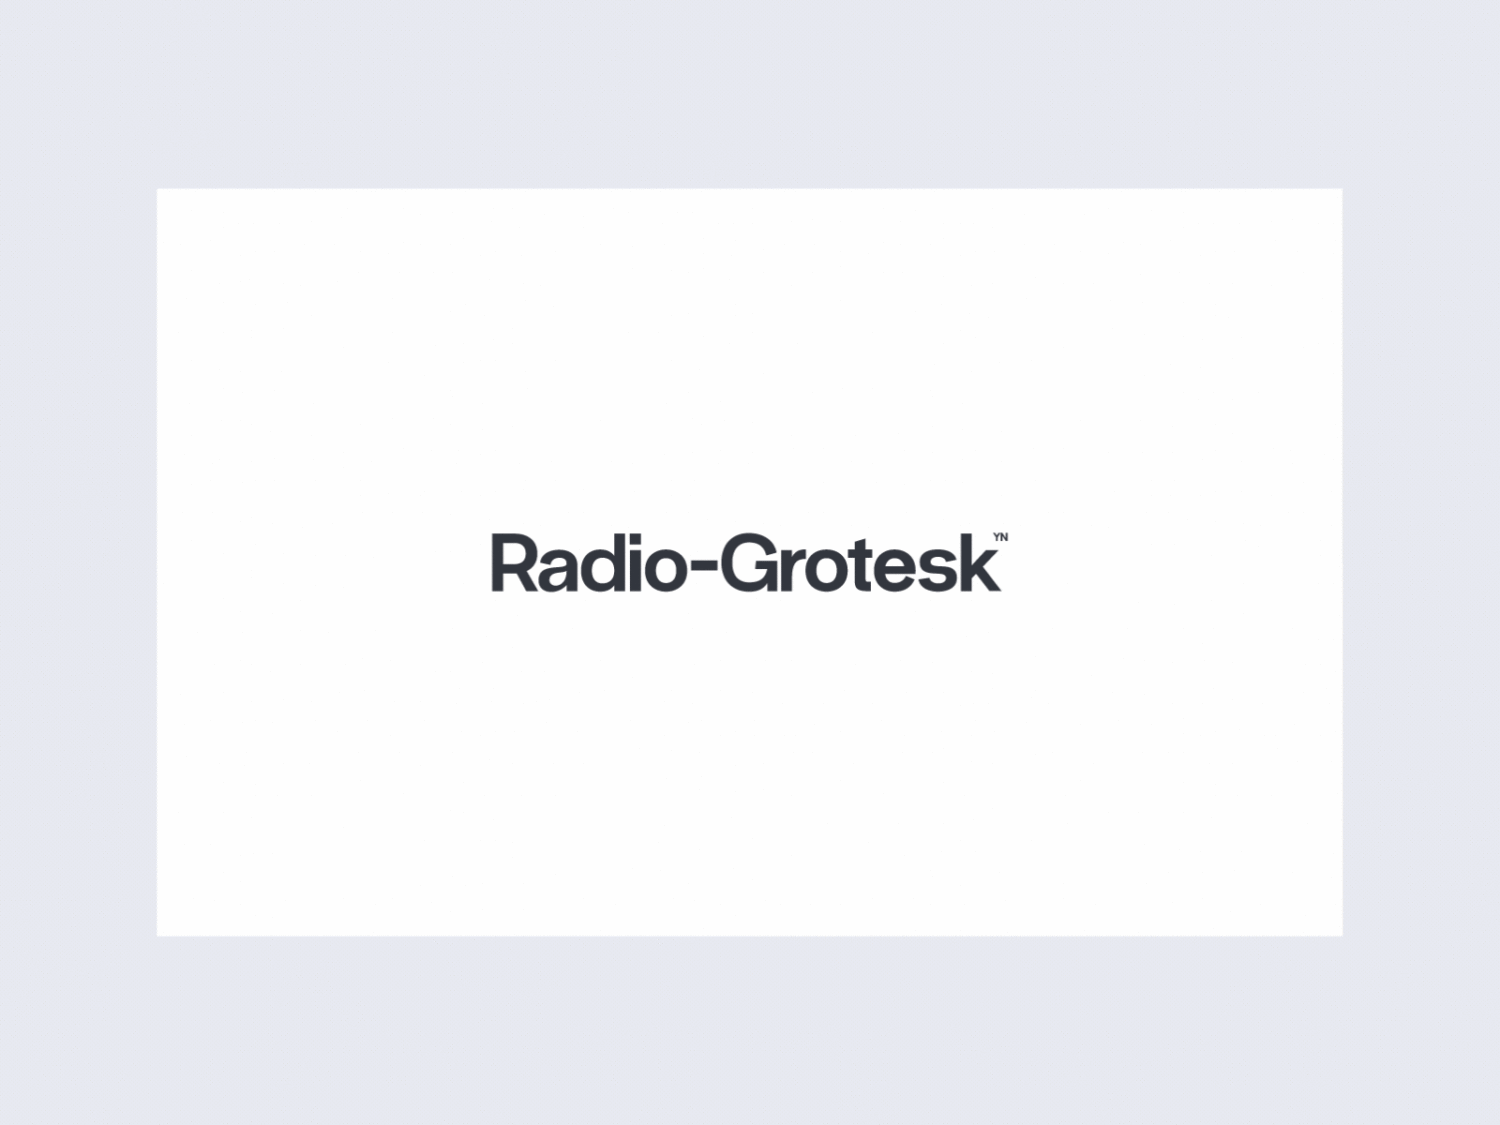 Radio-Grotesk Free Font